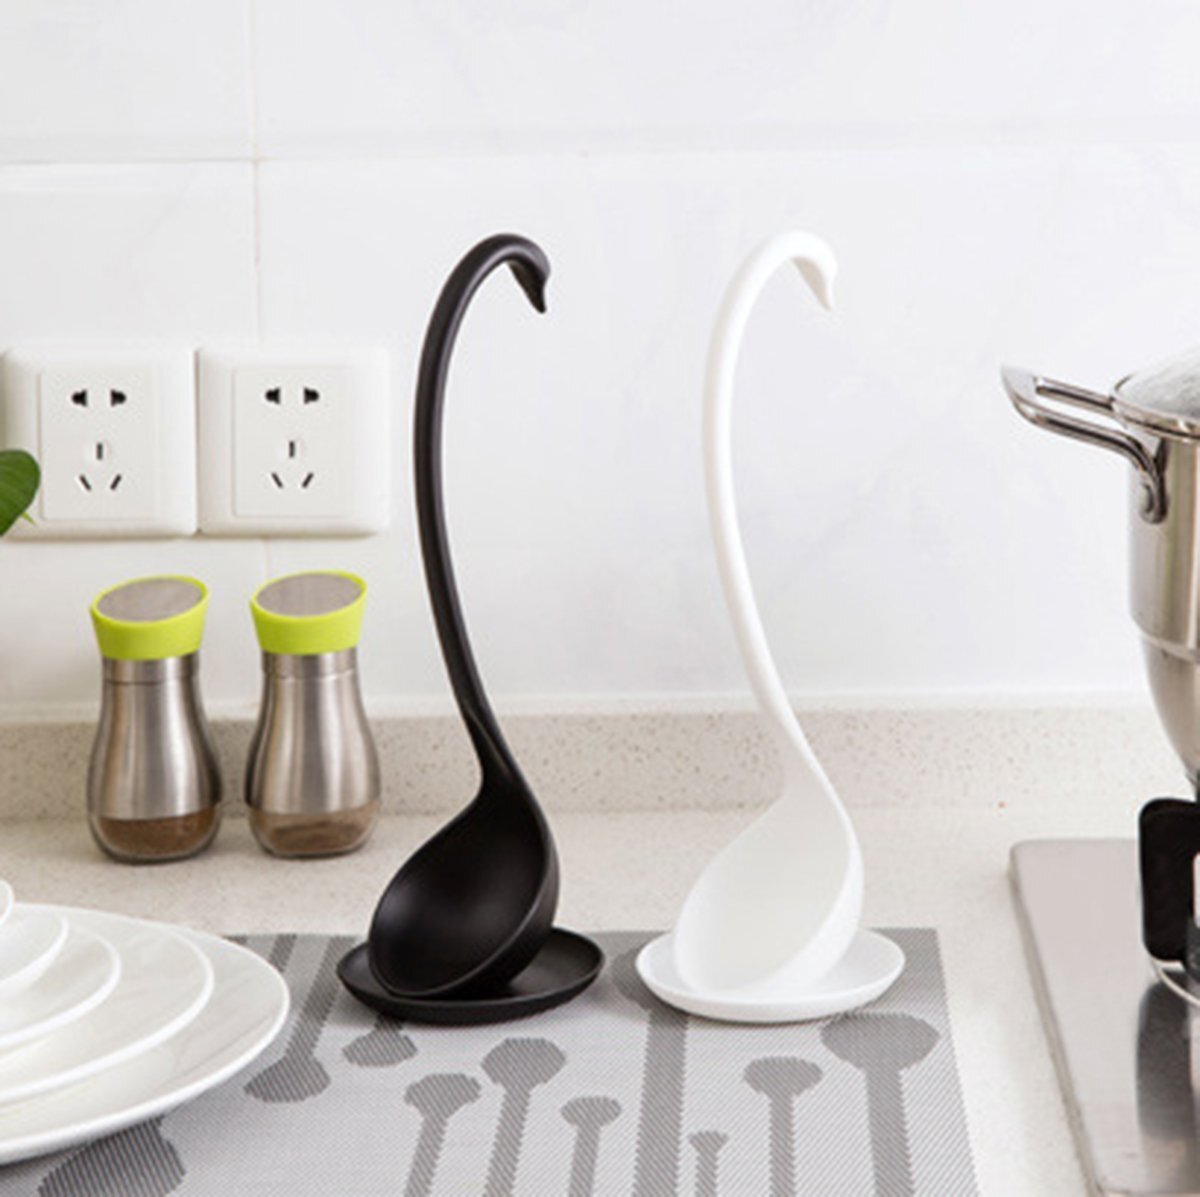 Elegant kitchen swan self-standing spoon